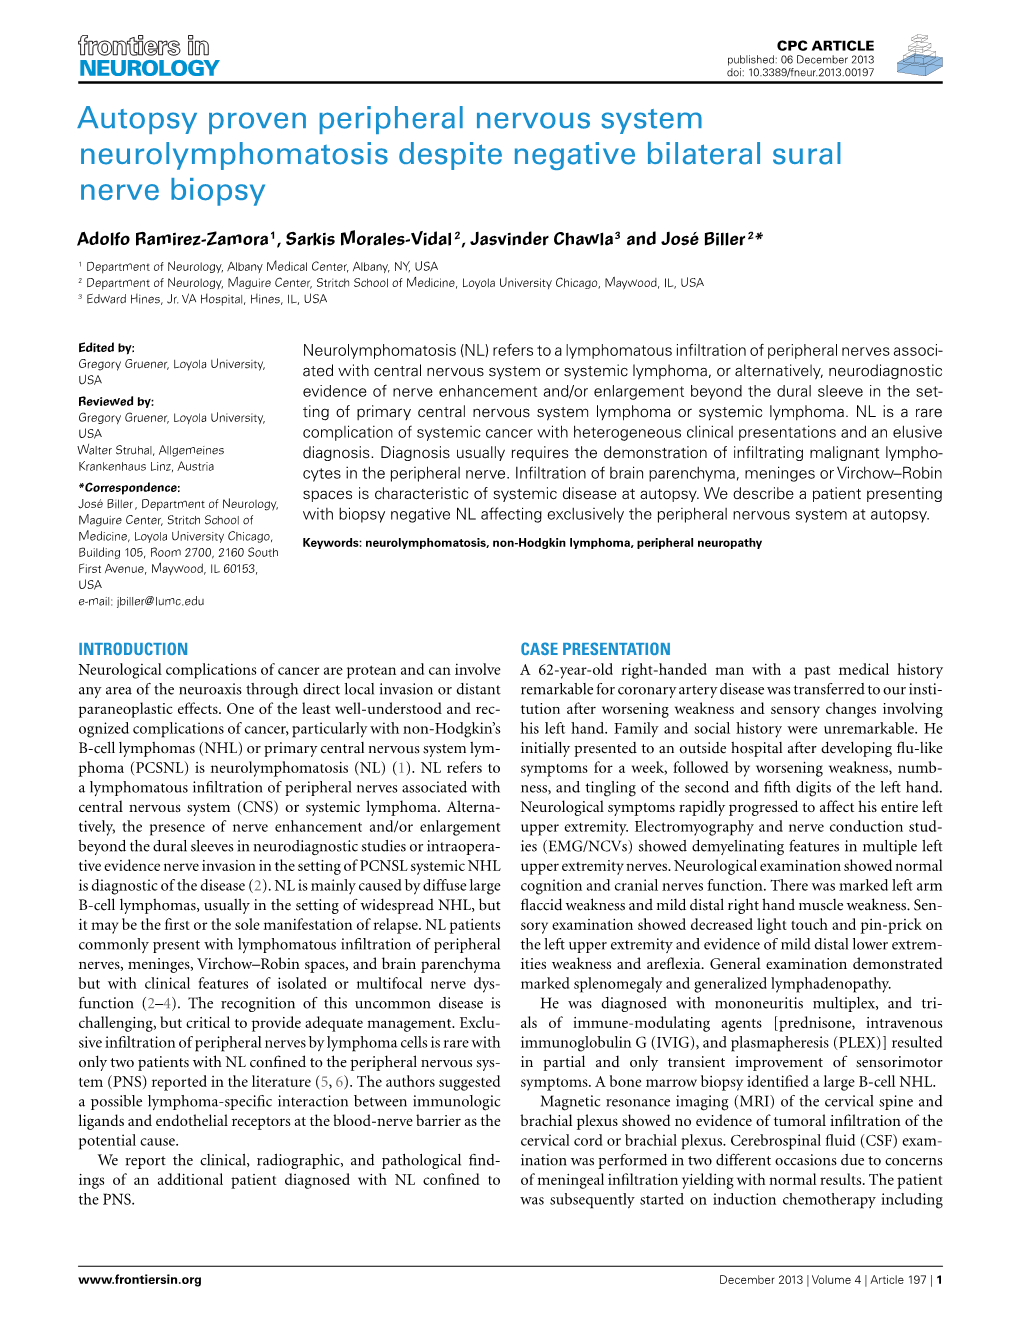 Autopsy Proven Peripheral Nervous System Neurolymphomatosis Despite Negative Bilateral Sural Nerve Biopsy